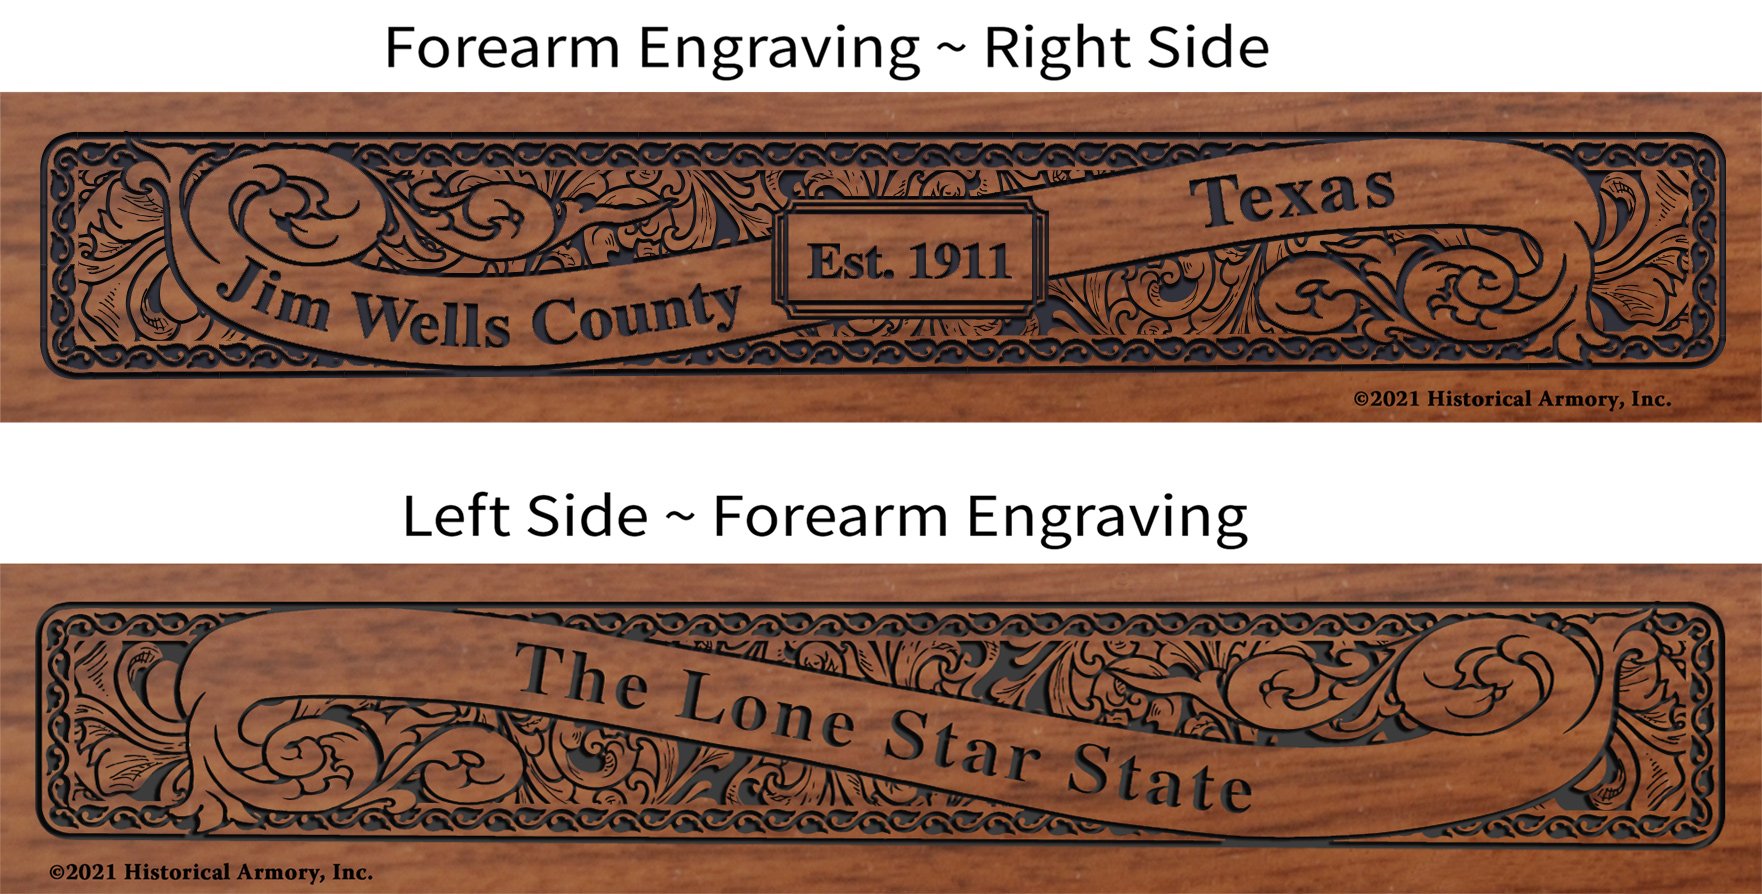 Jim Wells County Texas Establishment and Motto History Engraved Rifle Forearm